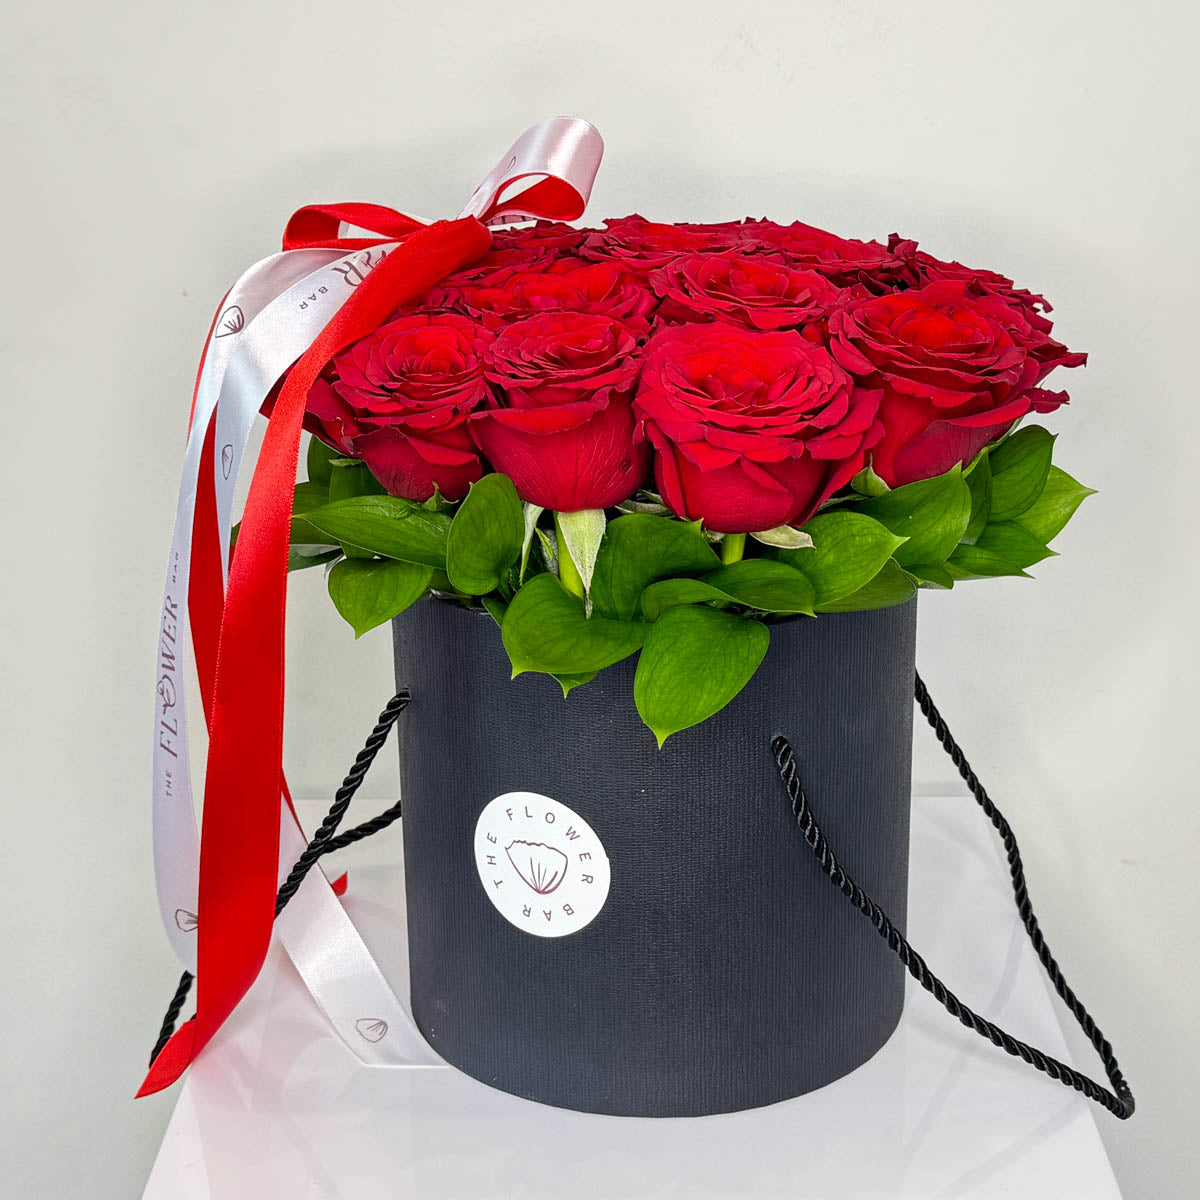 Black Box in 19 Red Roses